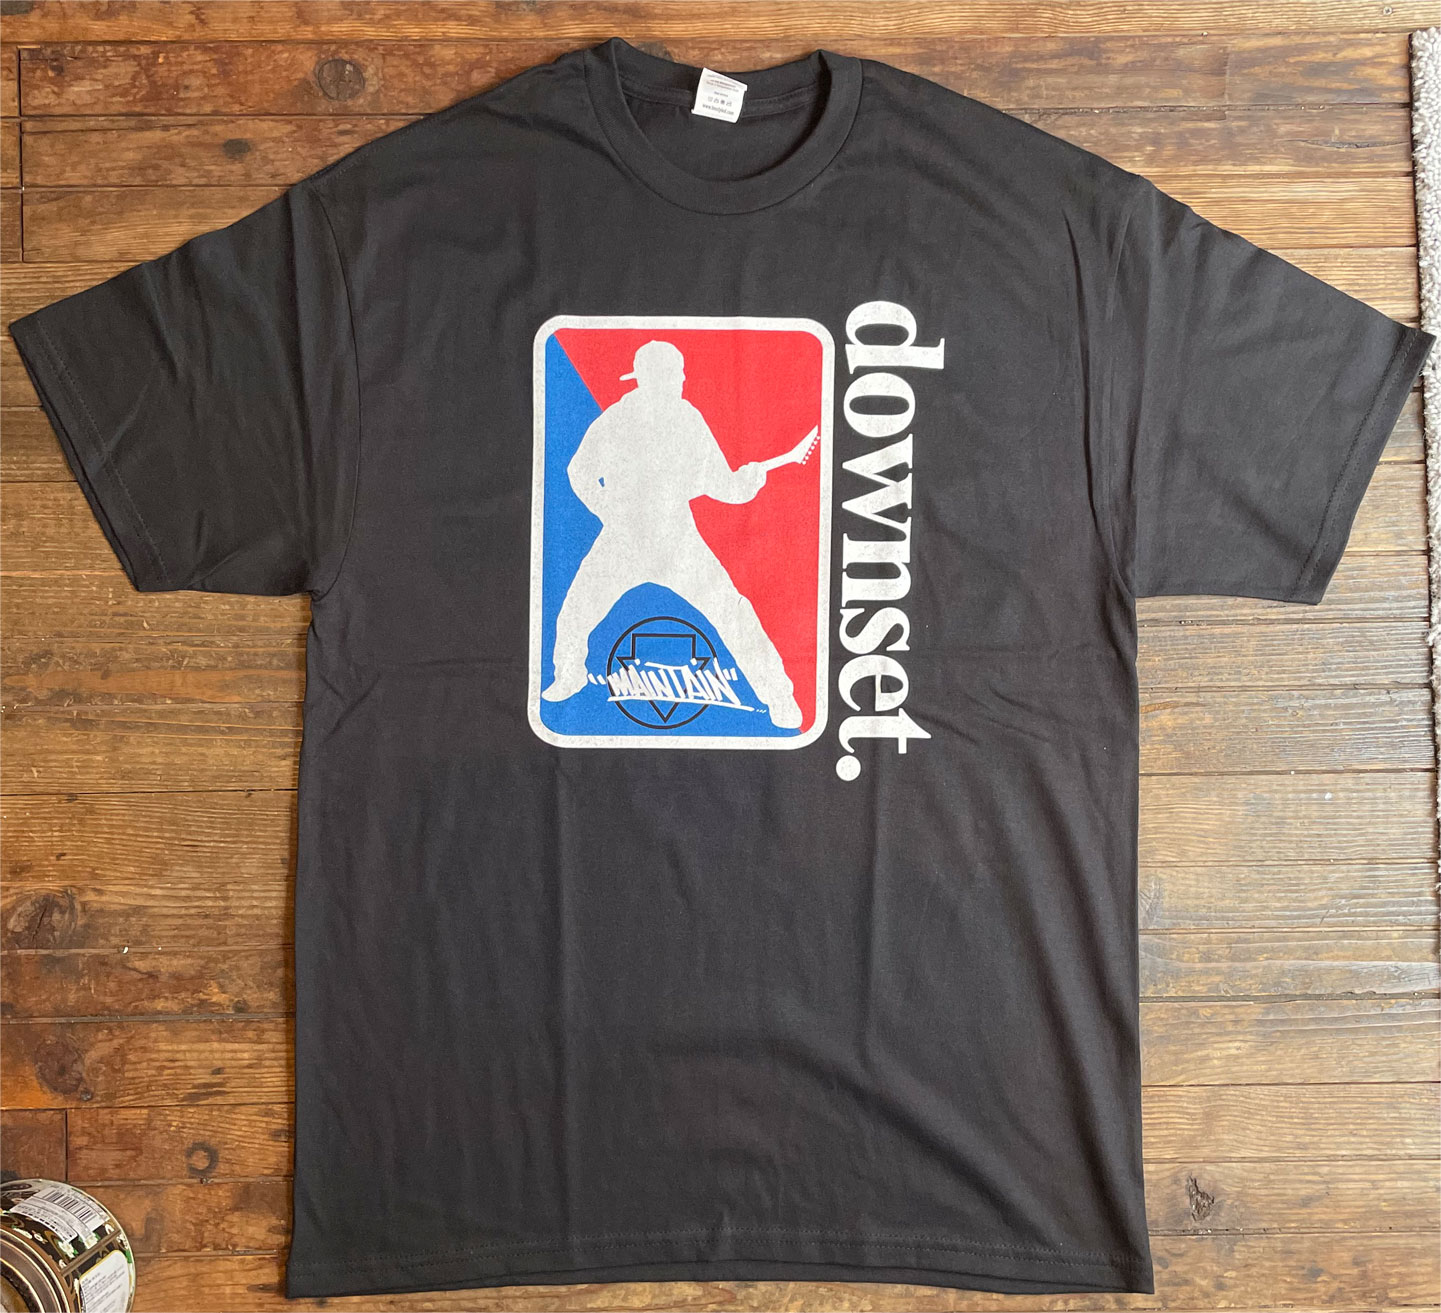 DOWNSET T-Shirt!!rapmetal